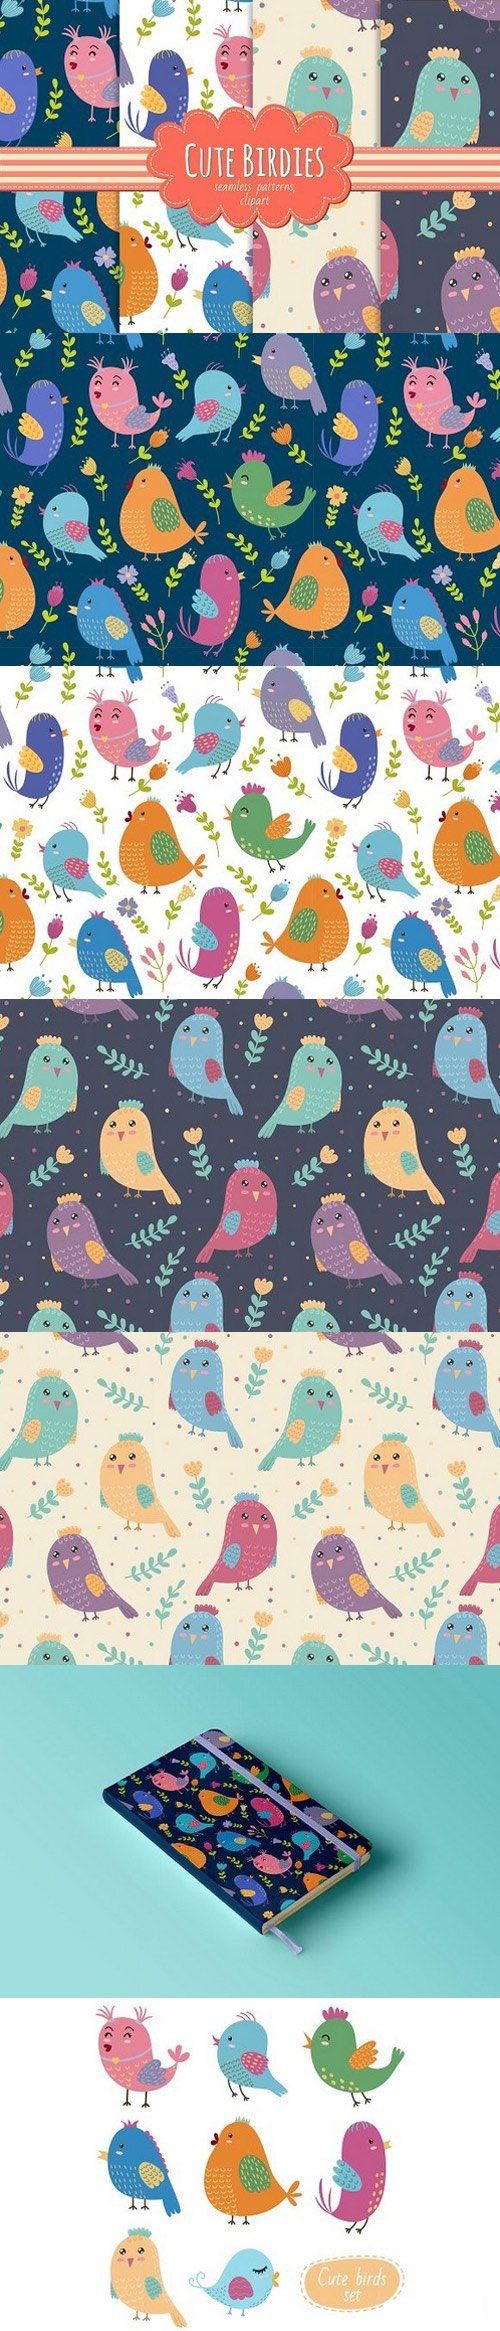 Cute Birdies: patterns&clipart 970718